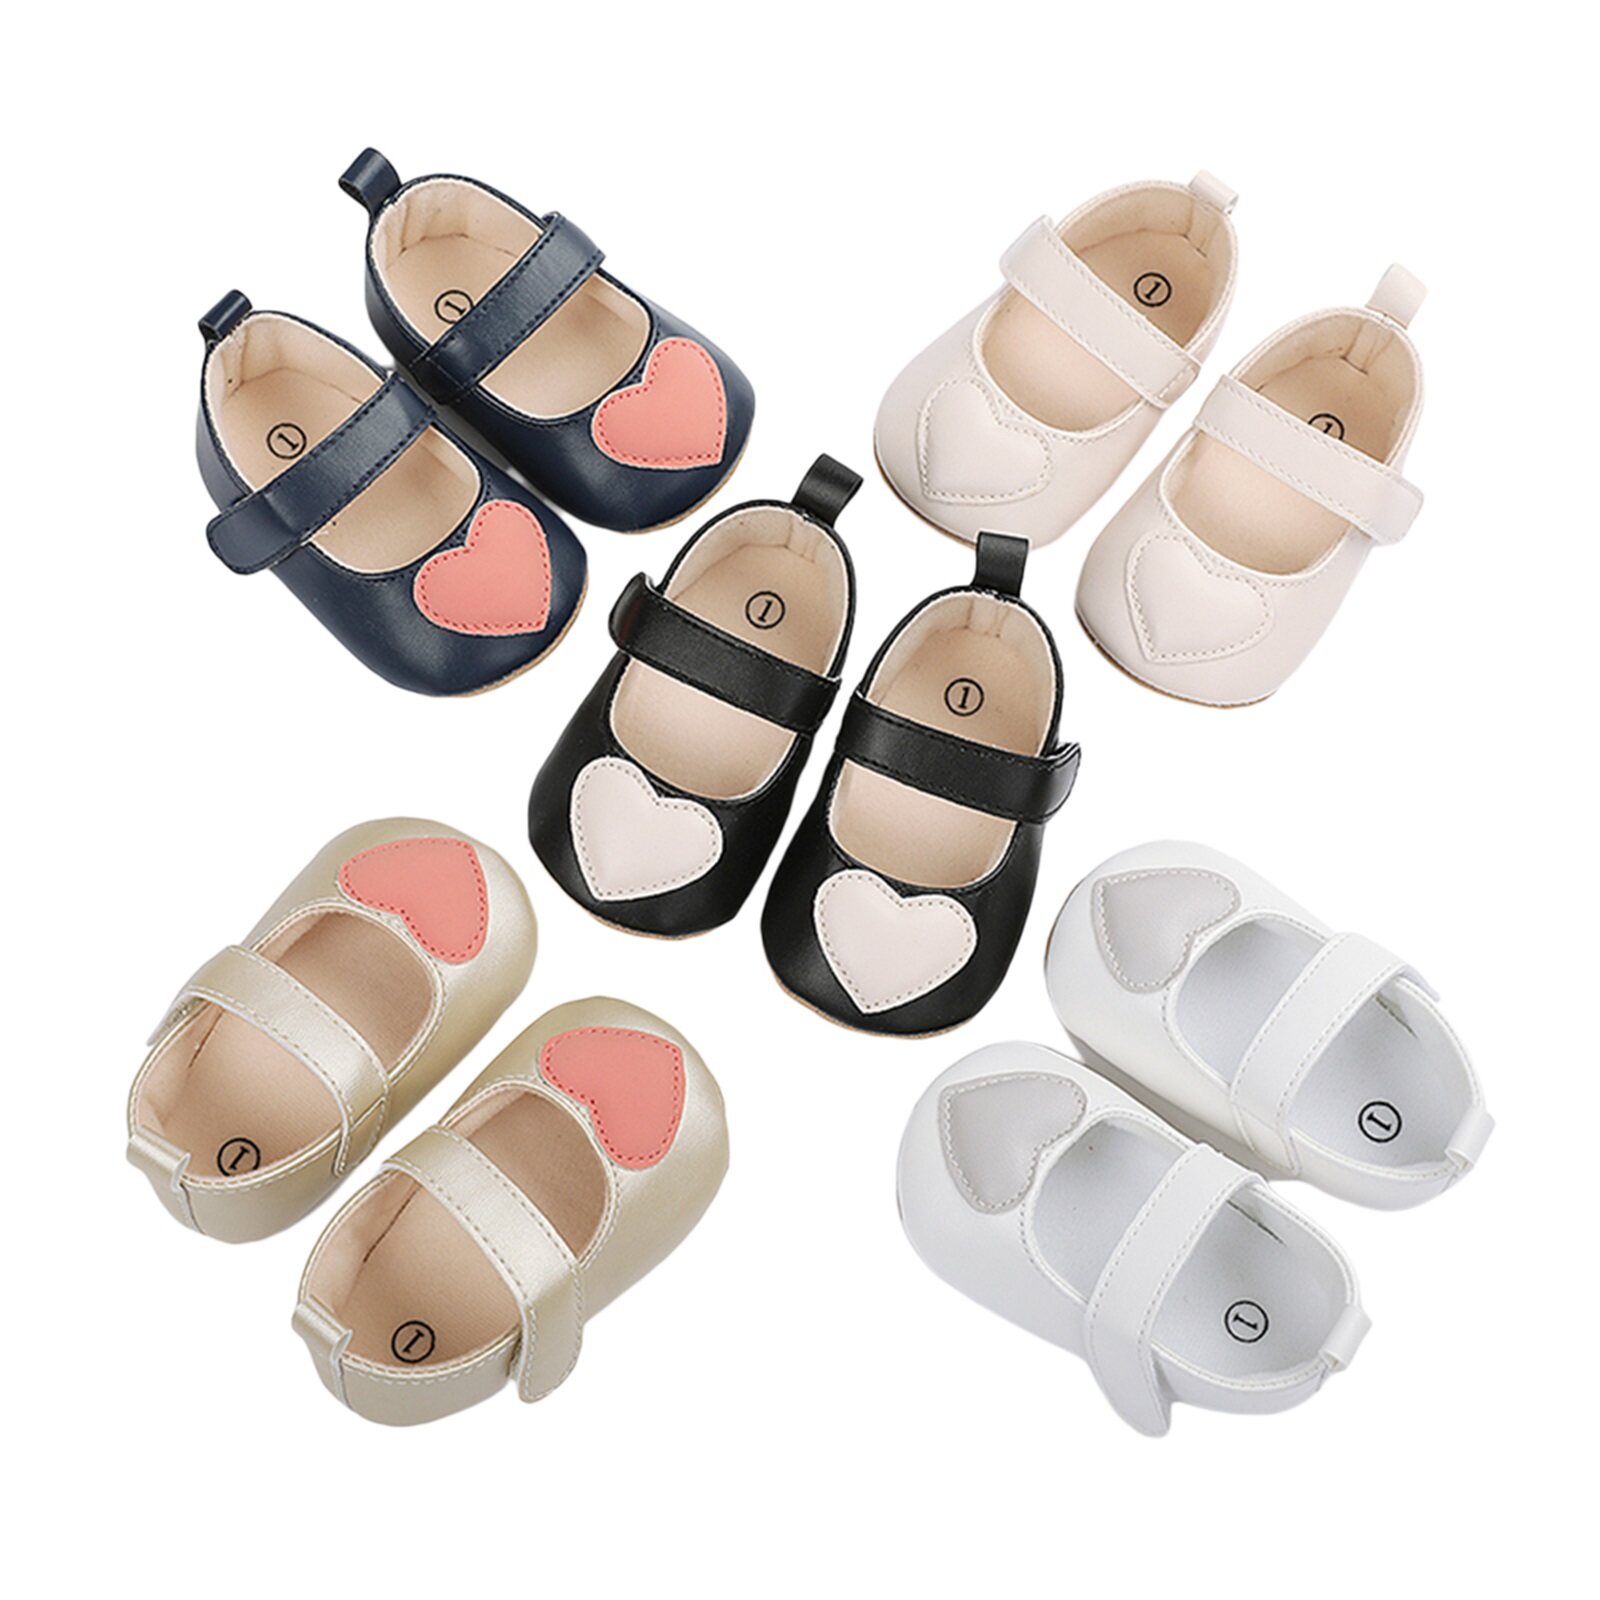 【Beautywoo】Babyสาวรองเท้าPUรองเท้าผ้าใบหนังเดินSoft-Soled Anti-Slip Patchworkหัวใจของขวัญวันเกิดสำหรับทารกแรกเกิดฤดูใบไม้ร่วงฤดูใบไม้ผลิ